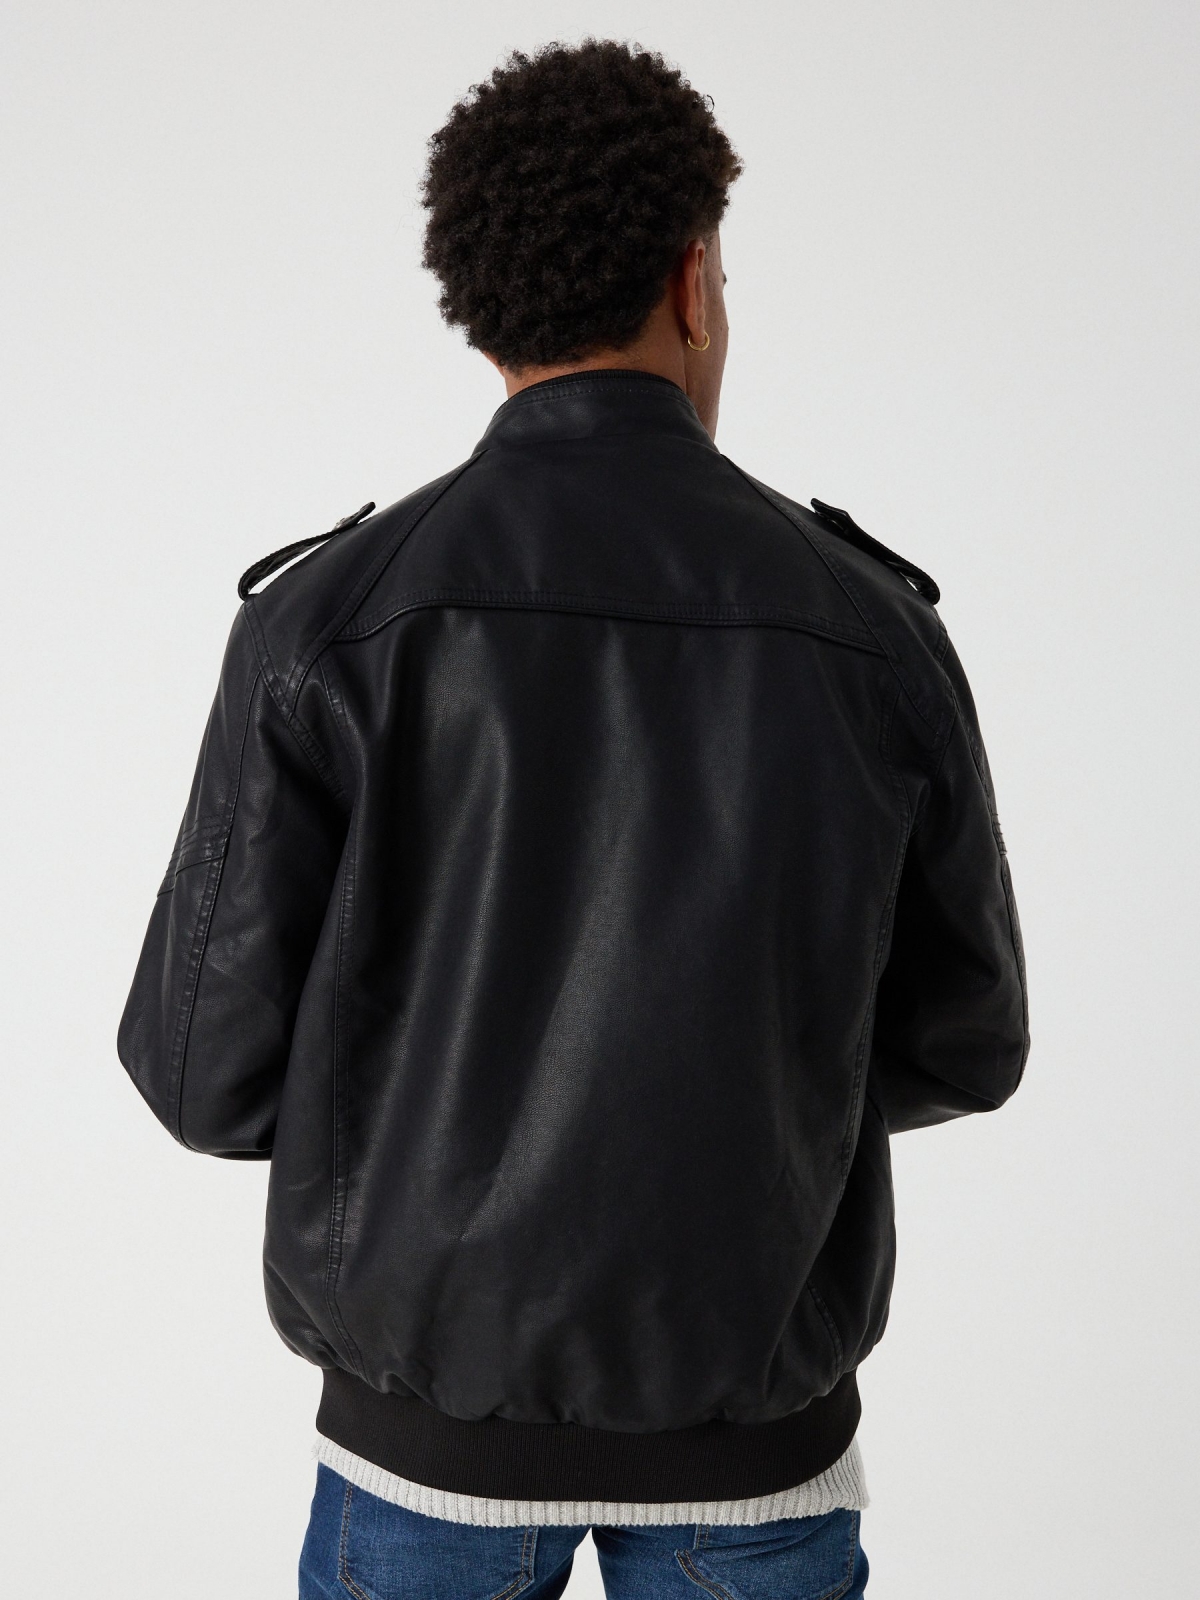 Black leather effect jacket black middle back view